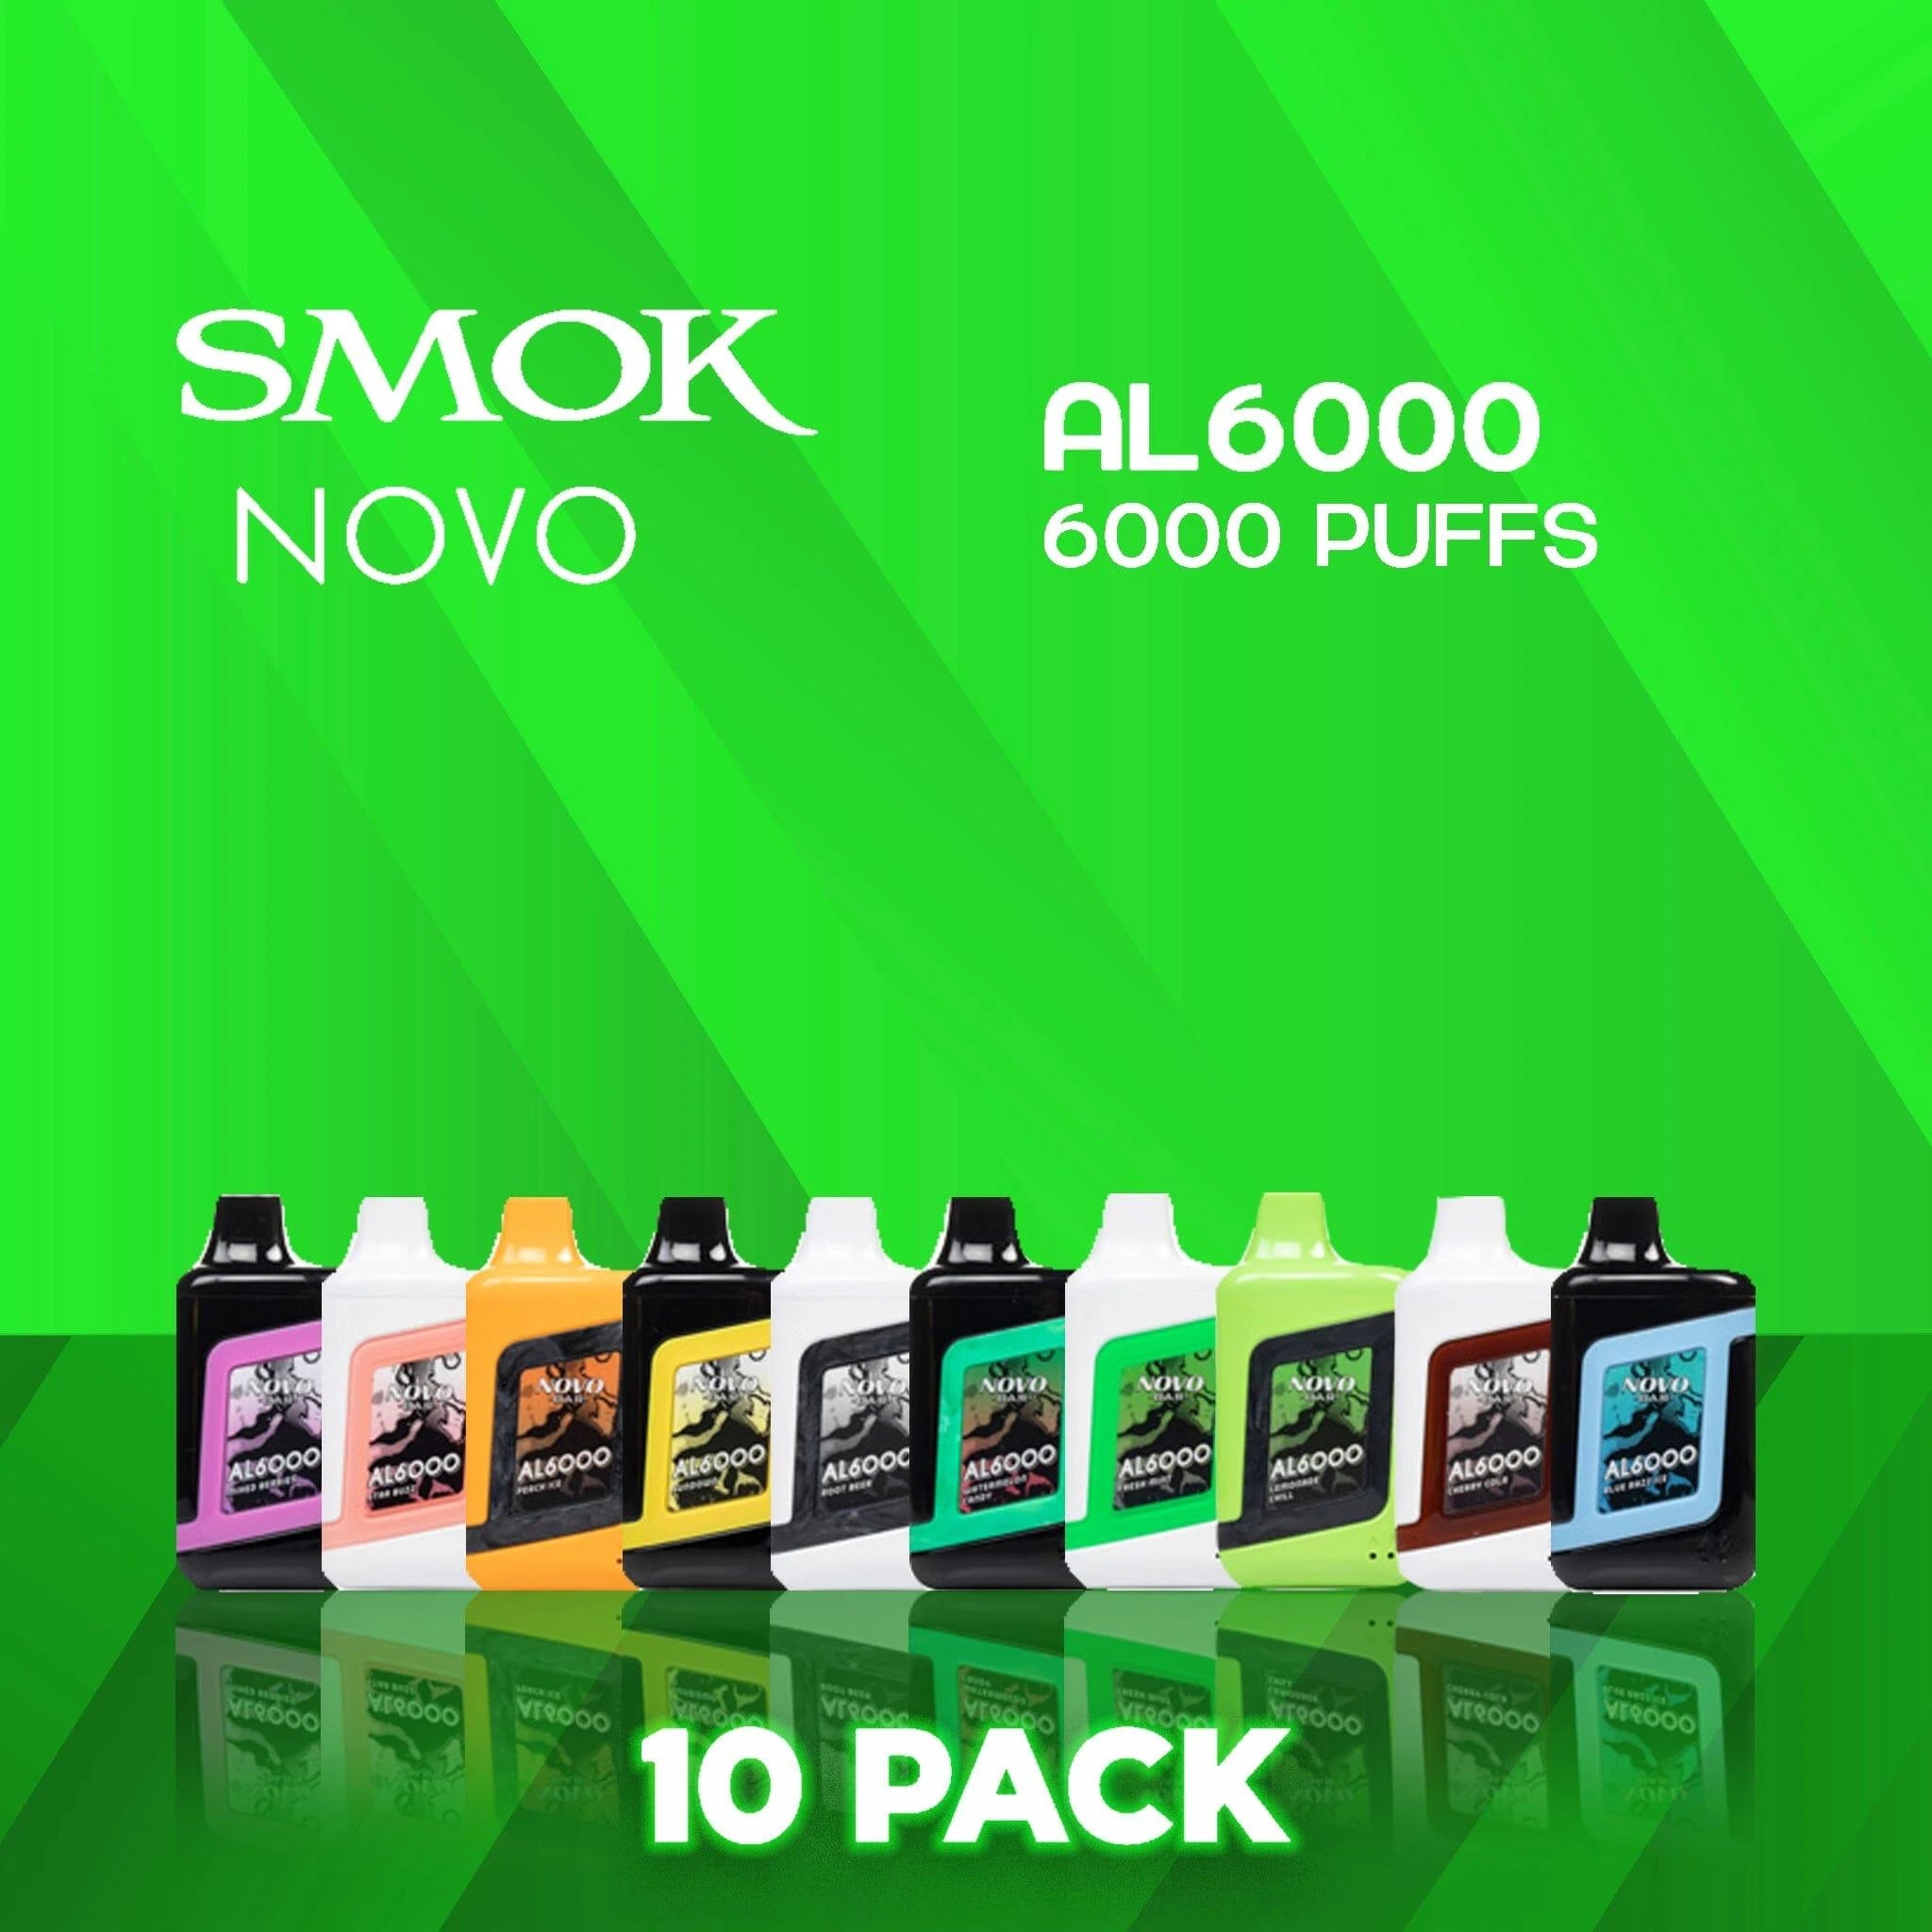 Smok Novo Bar AL6000 Disposable Vape - 10 Pack